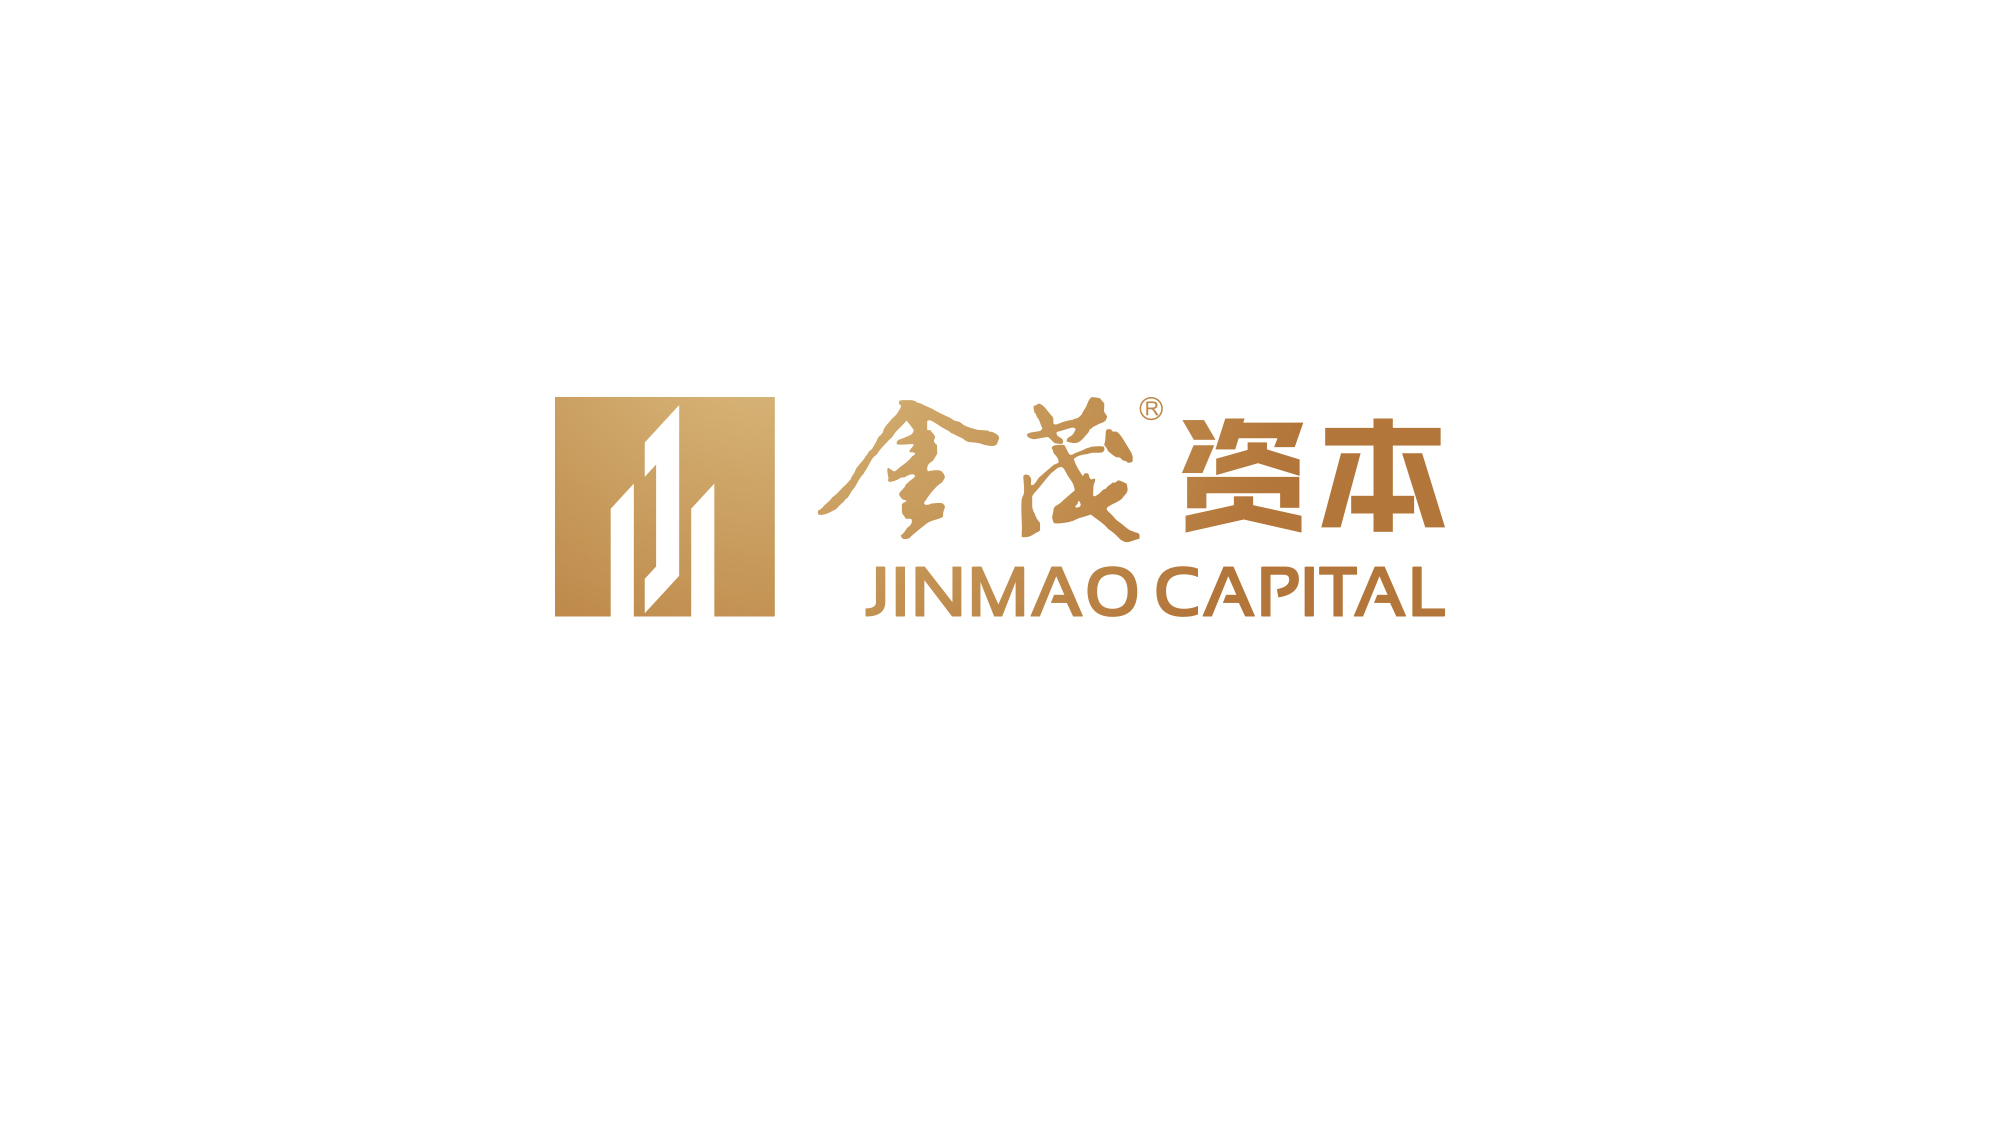  Jinmao Capital